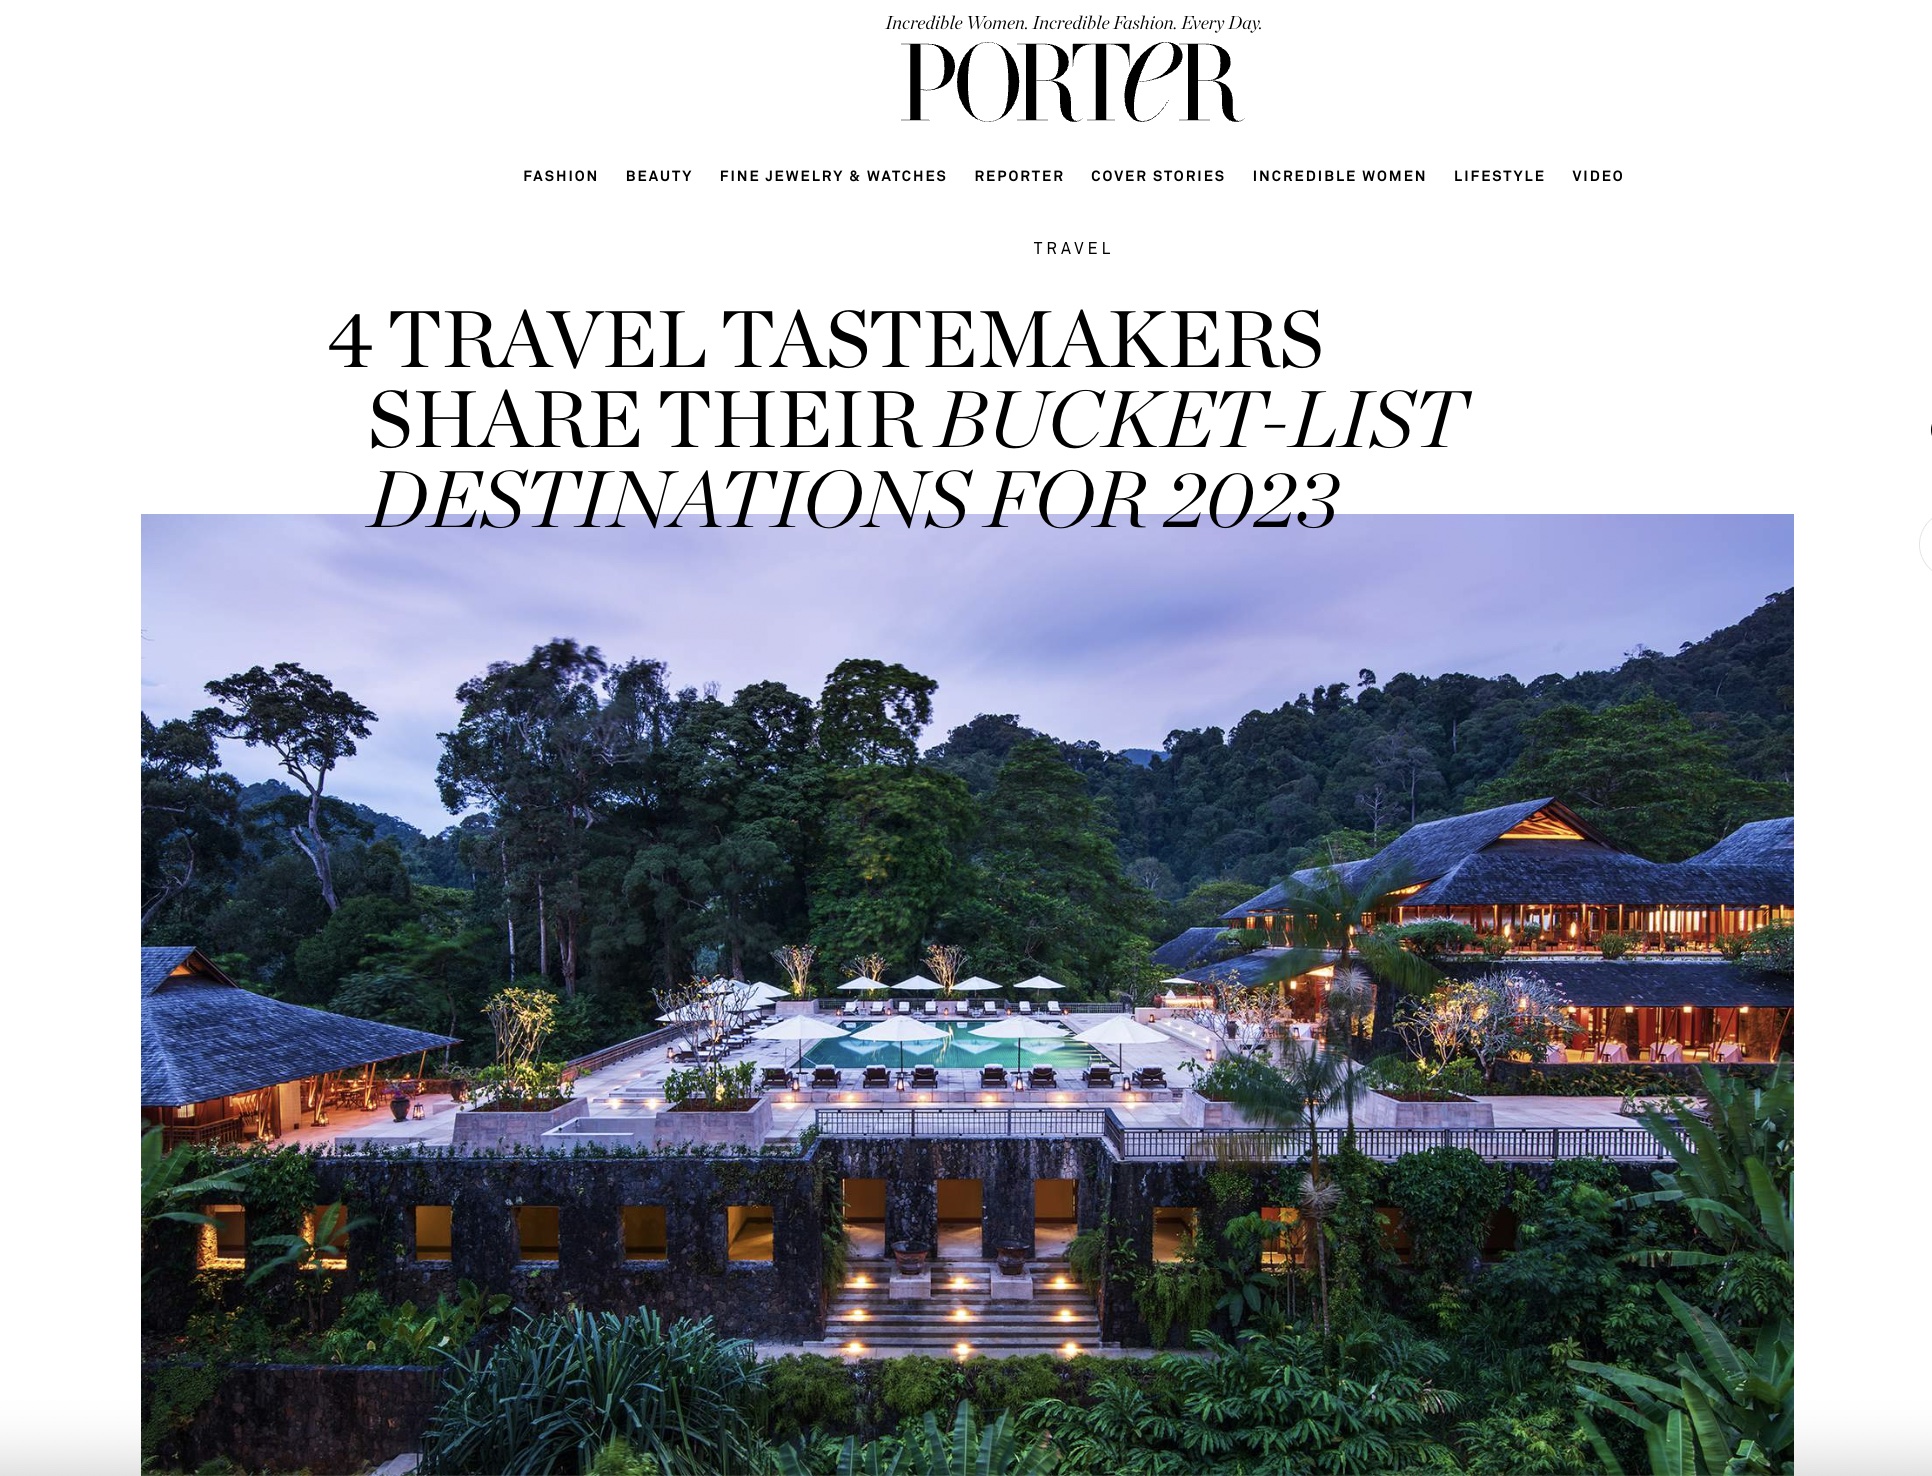 Porter: 4 Travel Tastemakers Share Their Bucket-List Destinations for 2023